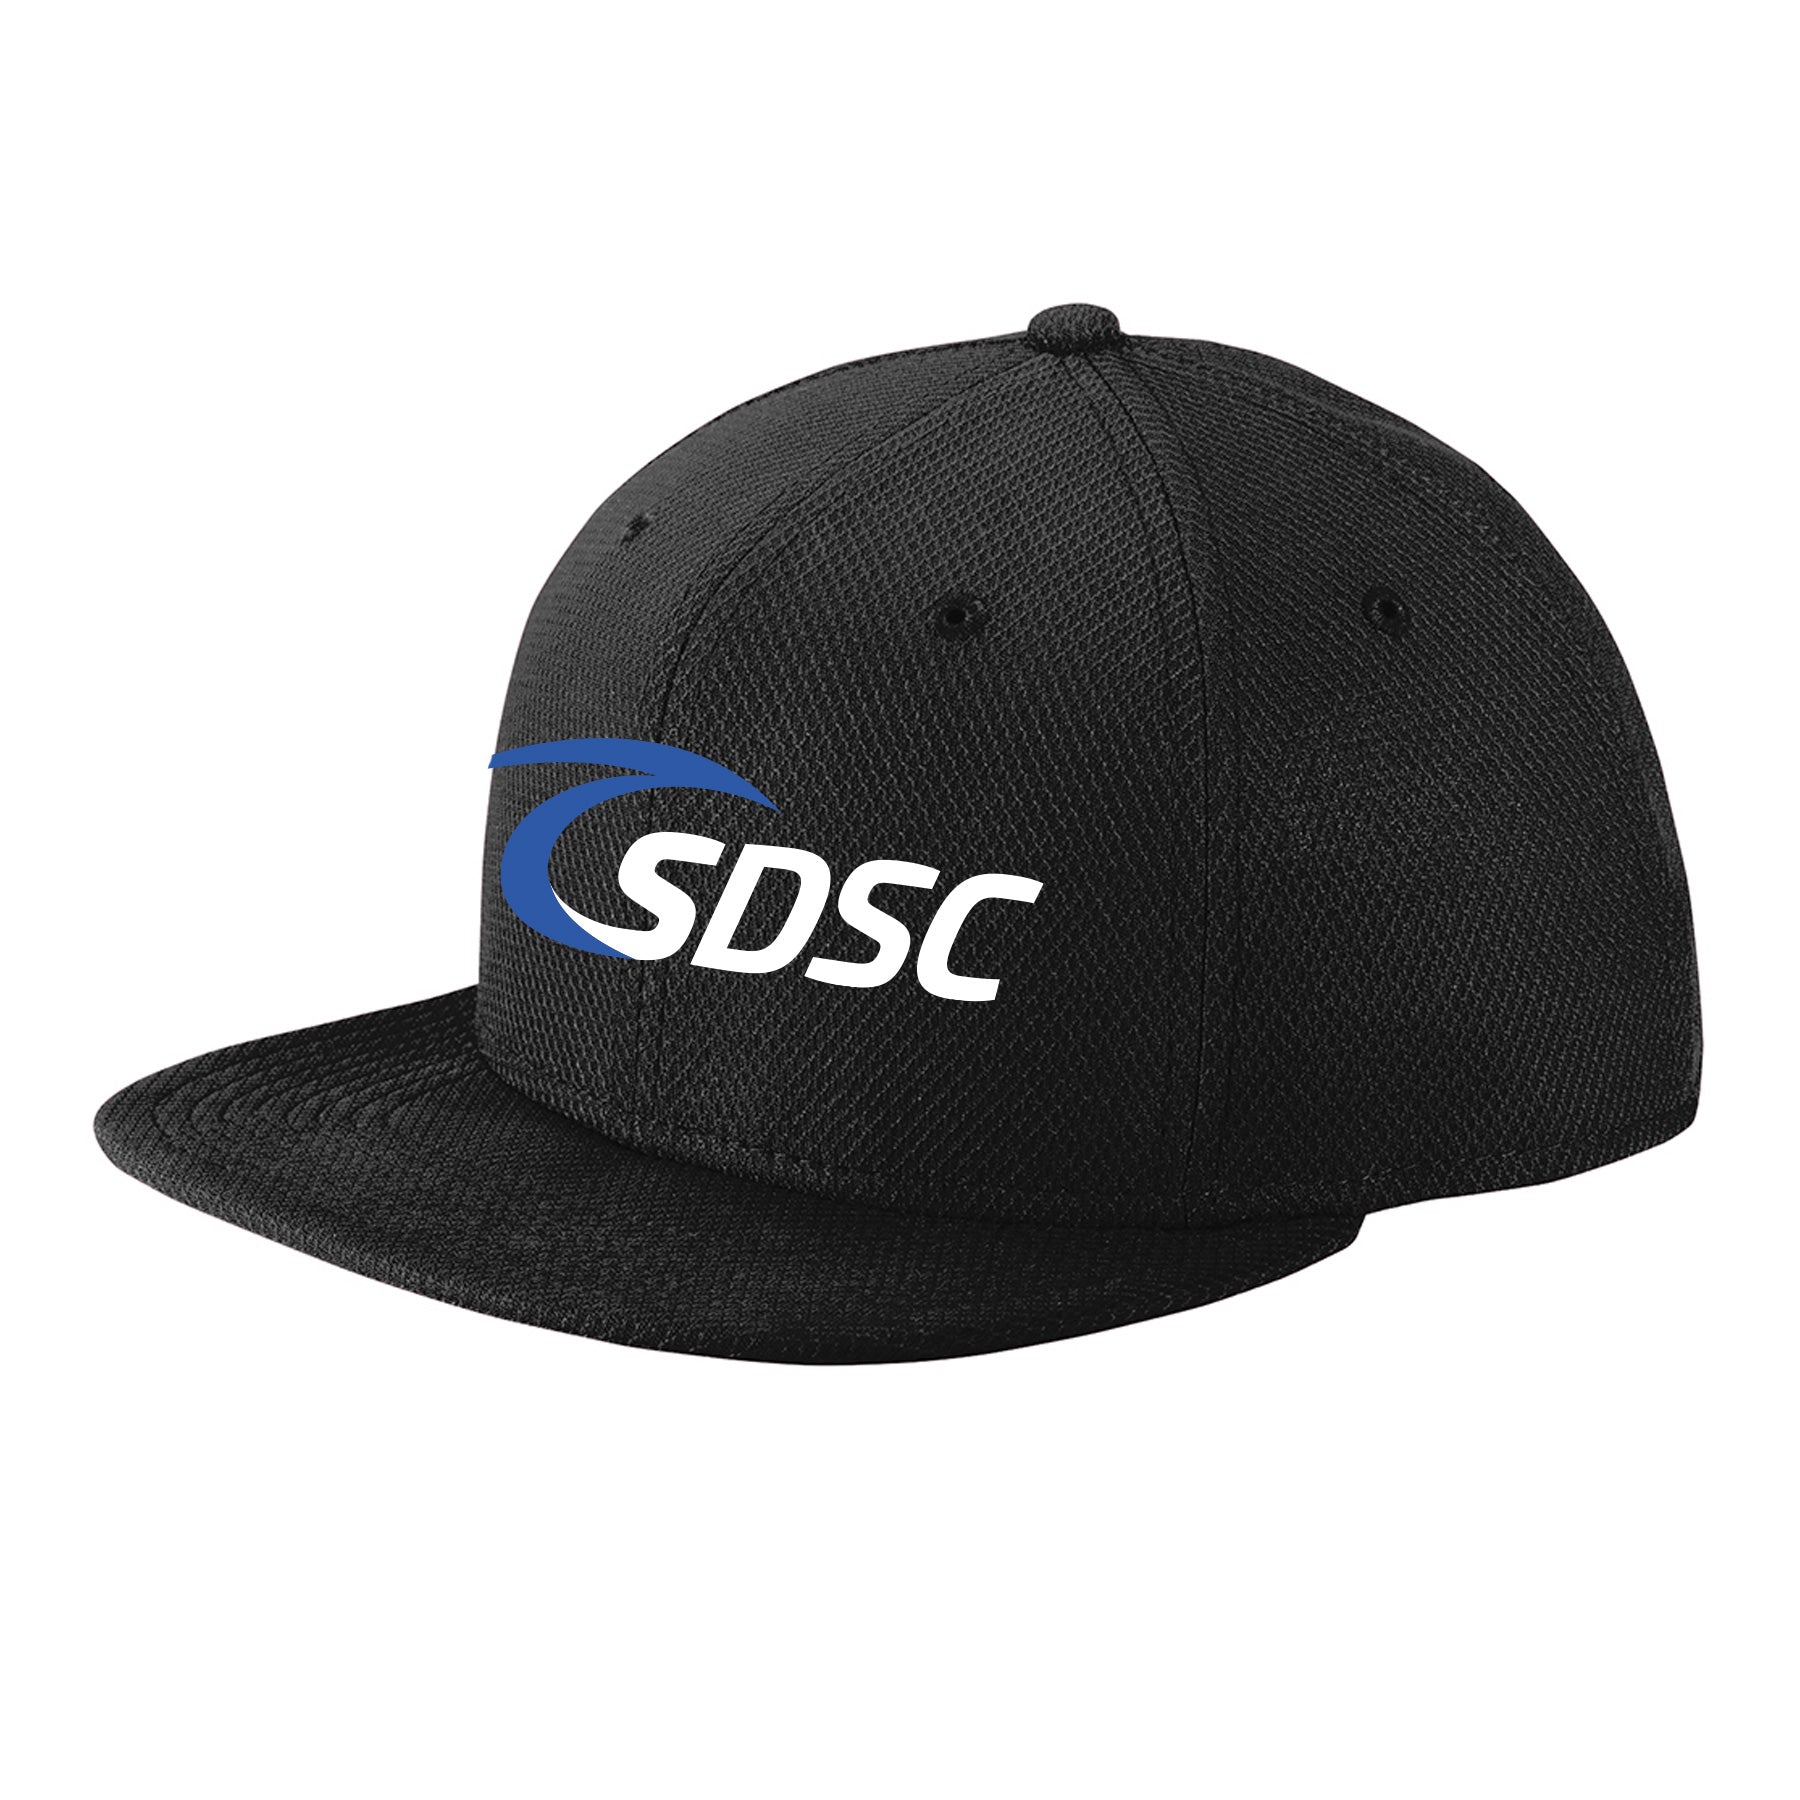 SDSC LOGO NEW ERA ORIGINAL FIT DIAMOND ERA FLAT BILL SNAPBACK CAP